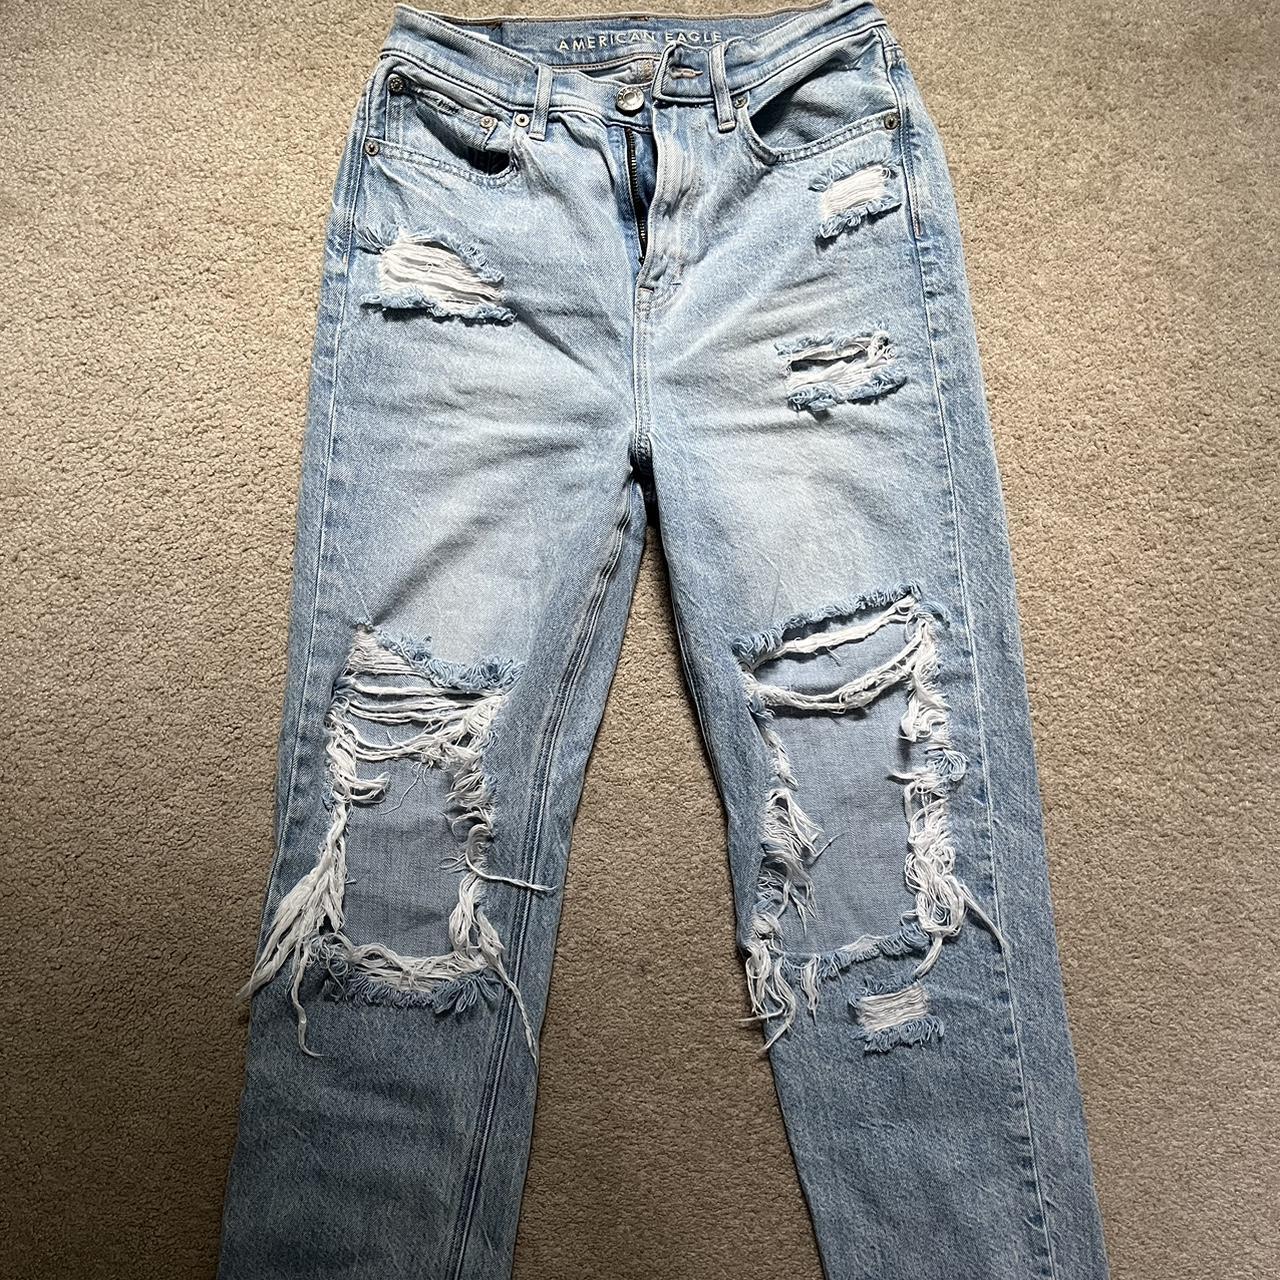 Short jeans American Eagle Original